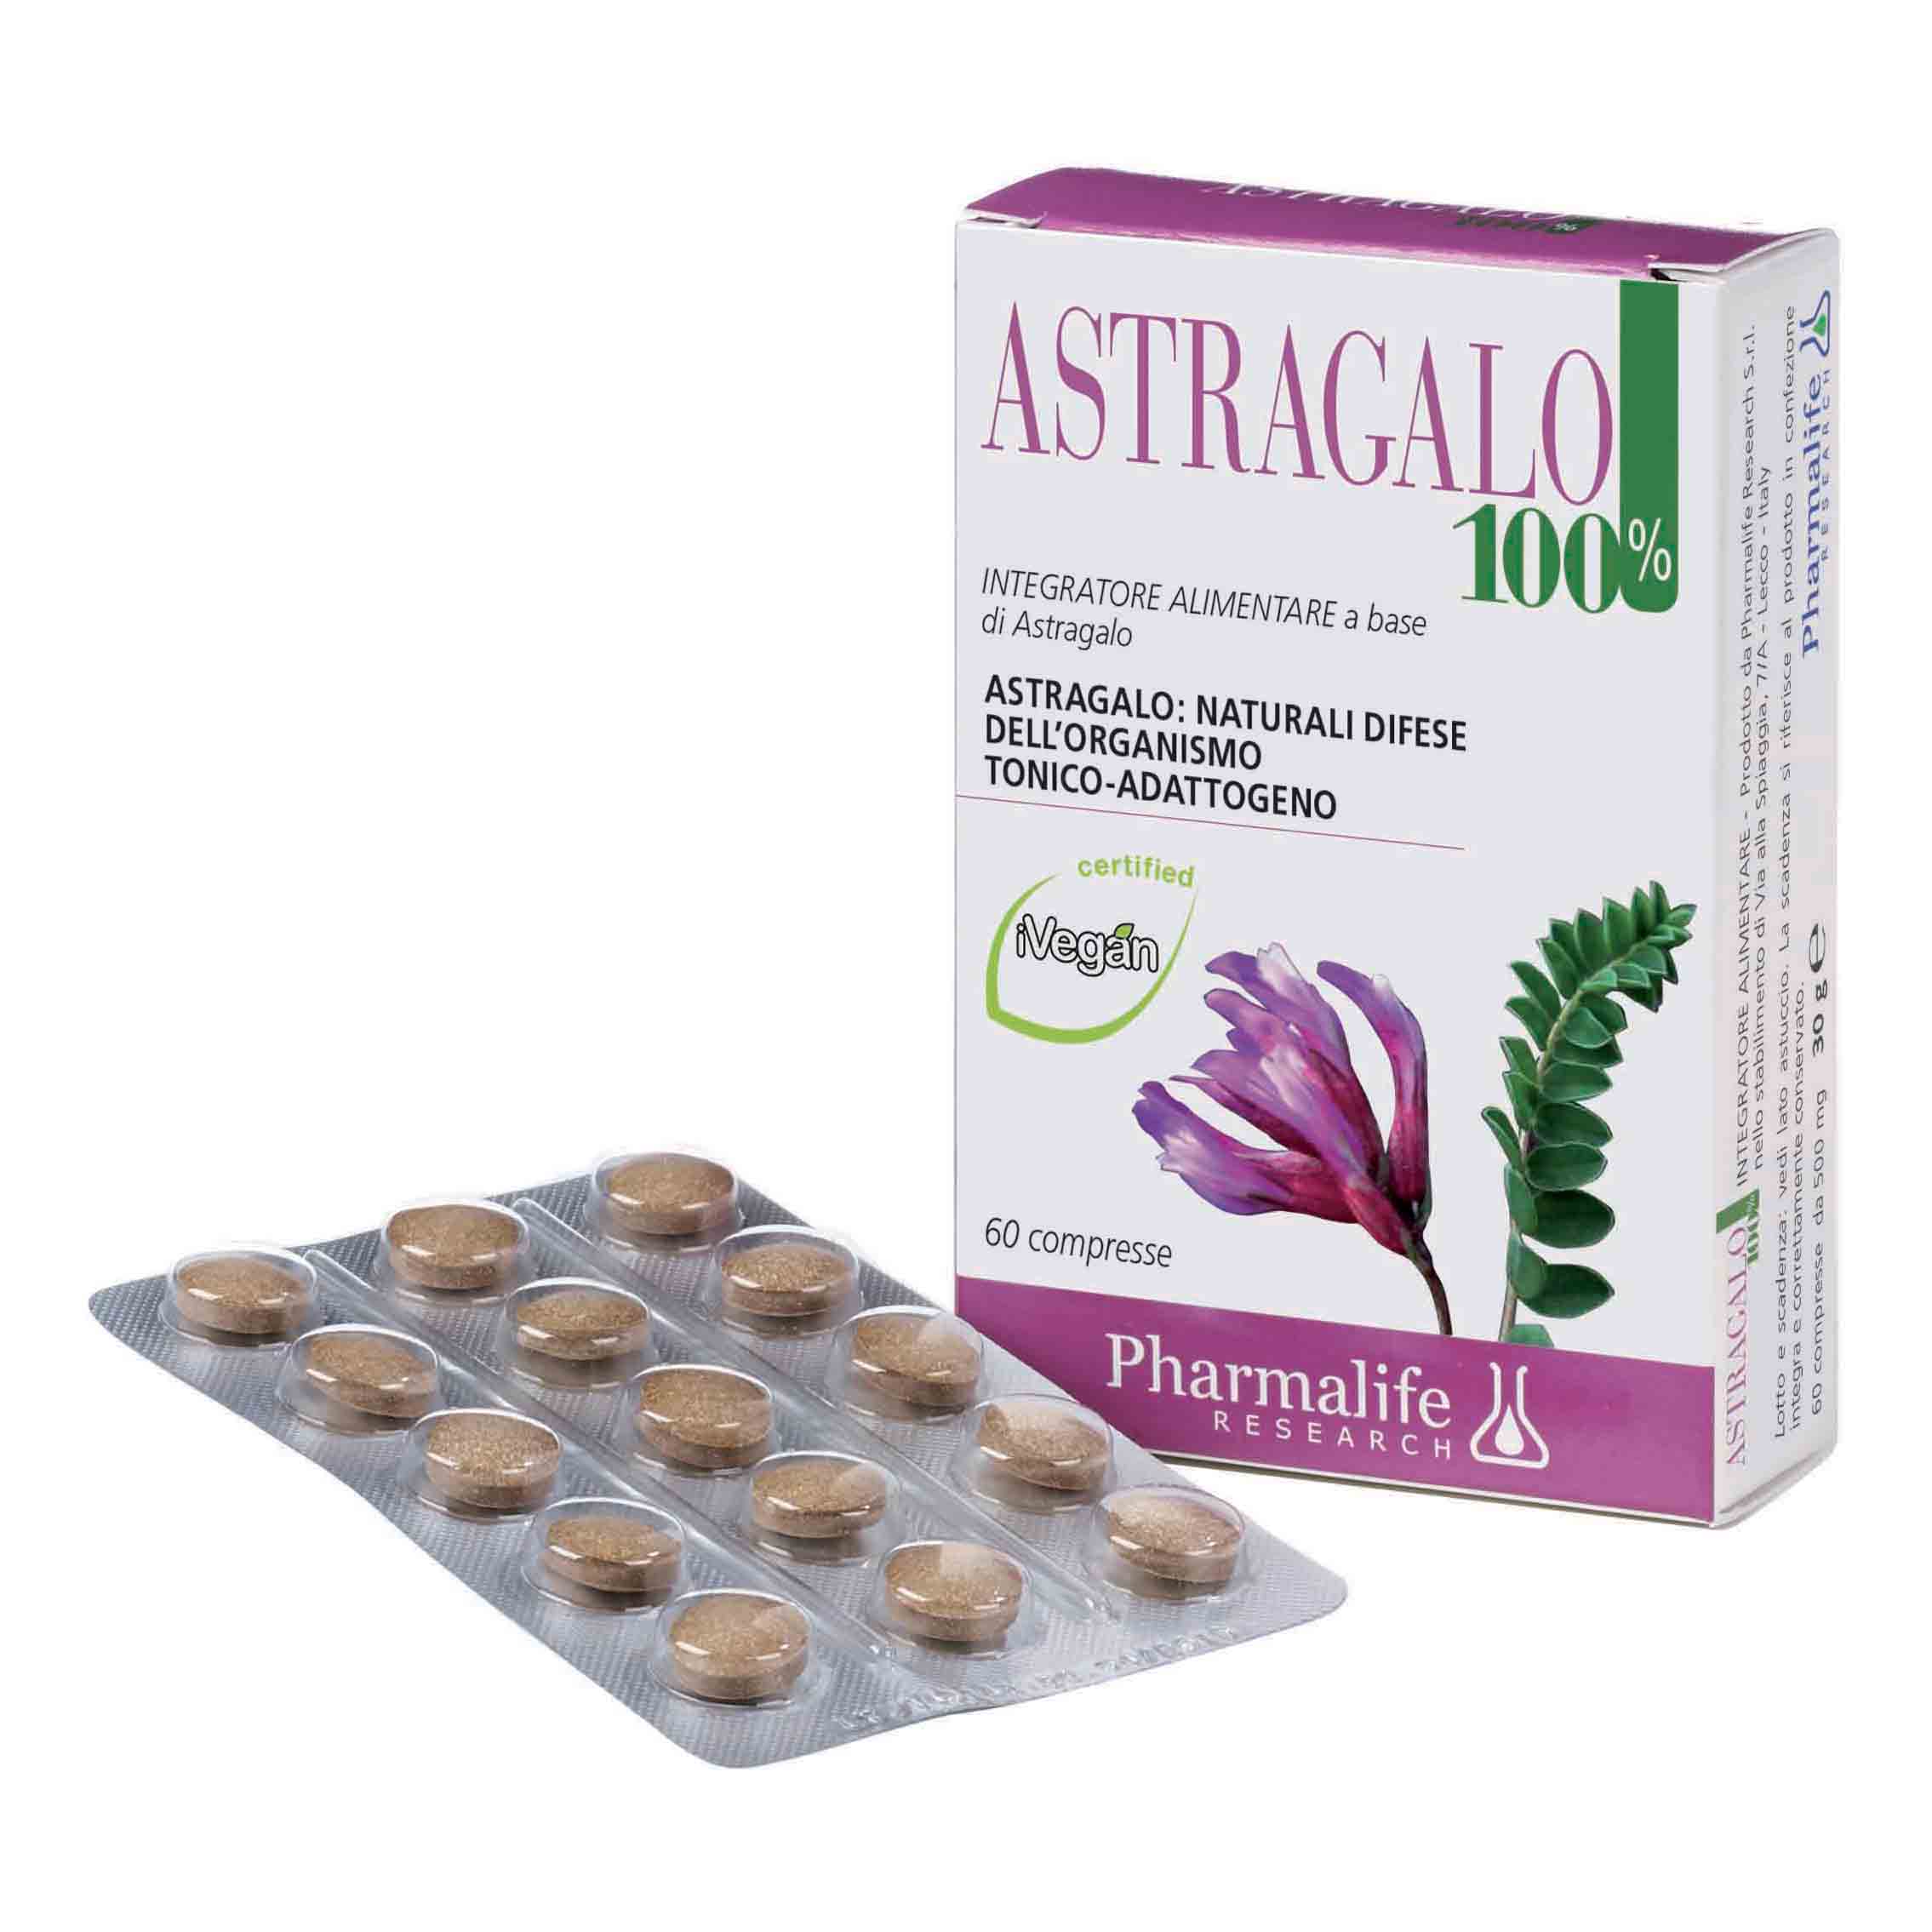 Pharmalife Research Srl Astragalo 100% 60 Compresse